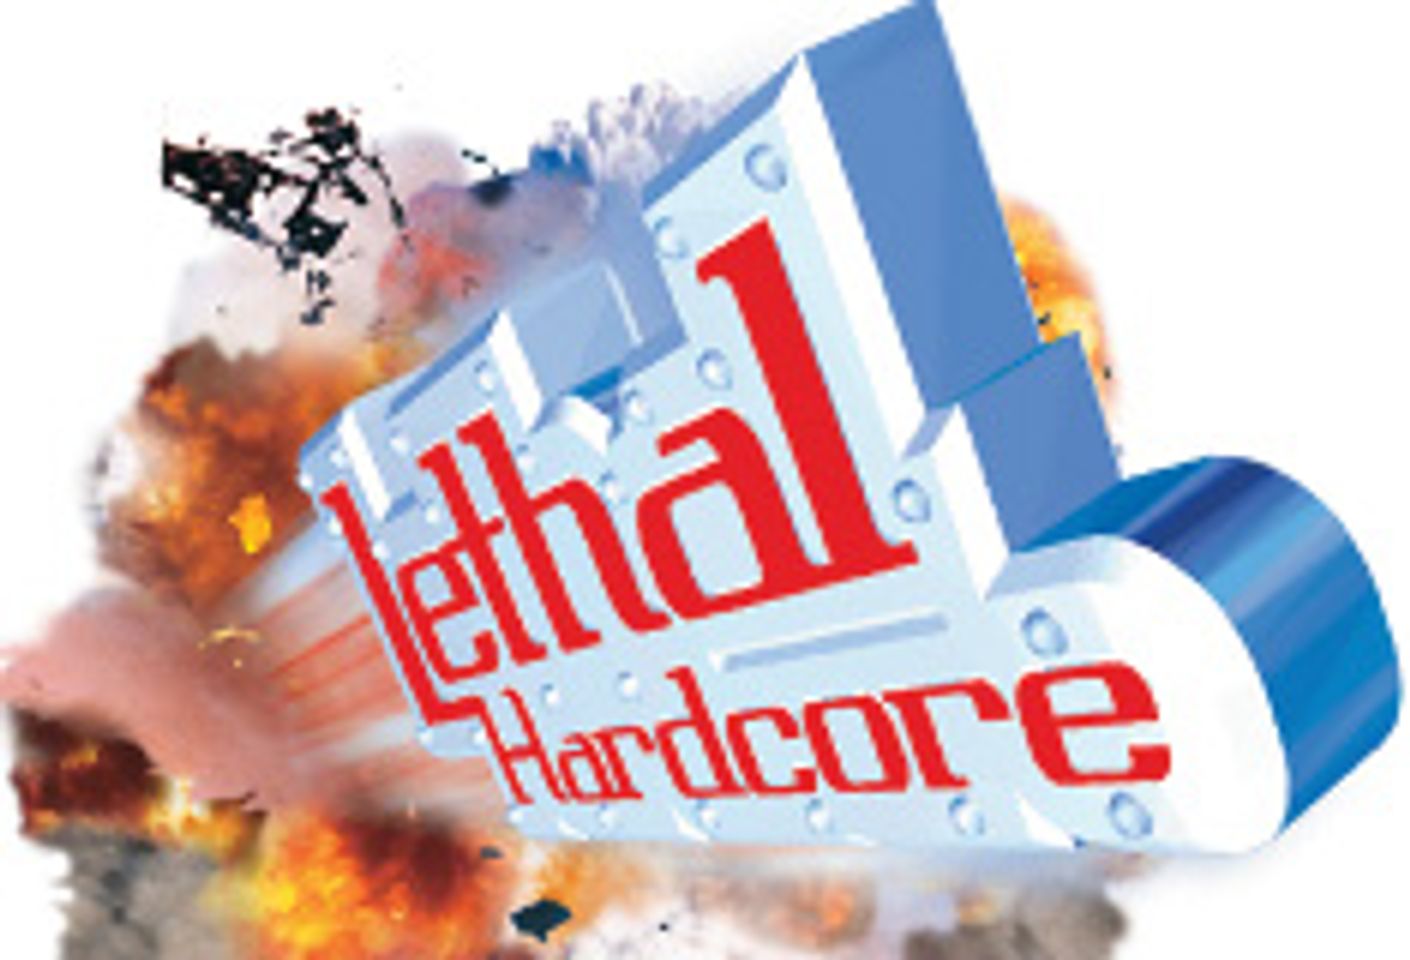 Lethal Hardcore Announces DVD Contest Giveaway